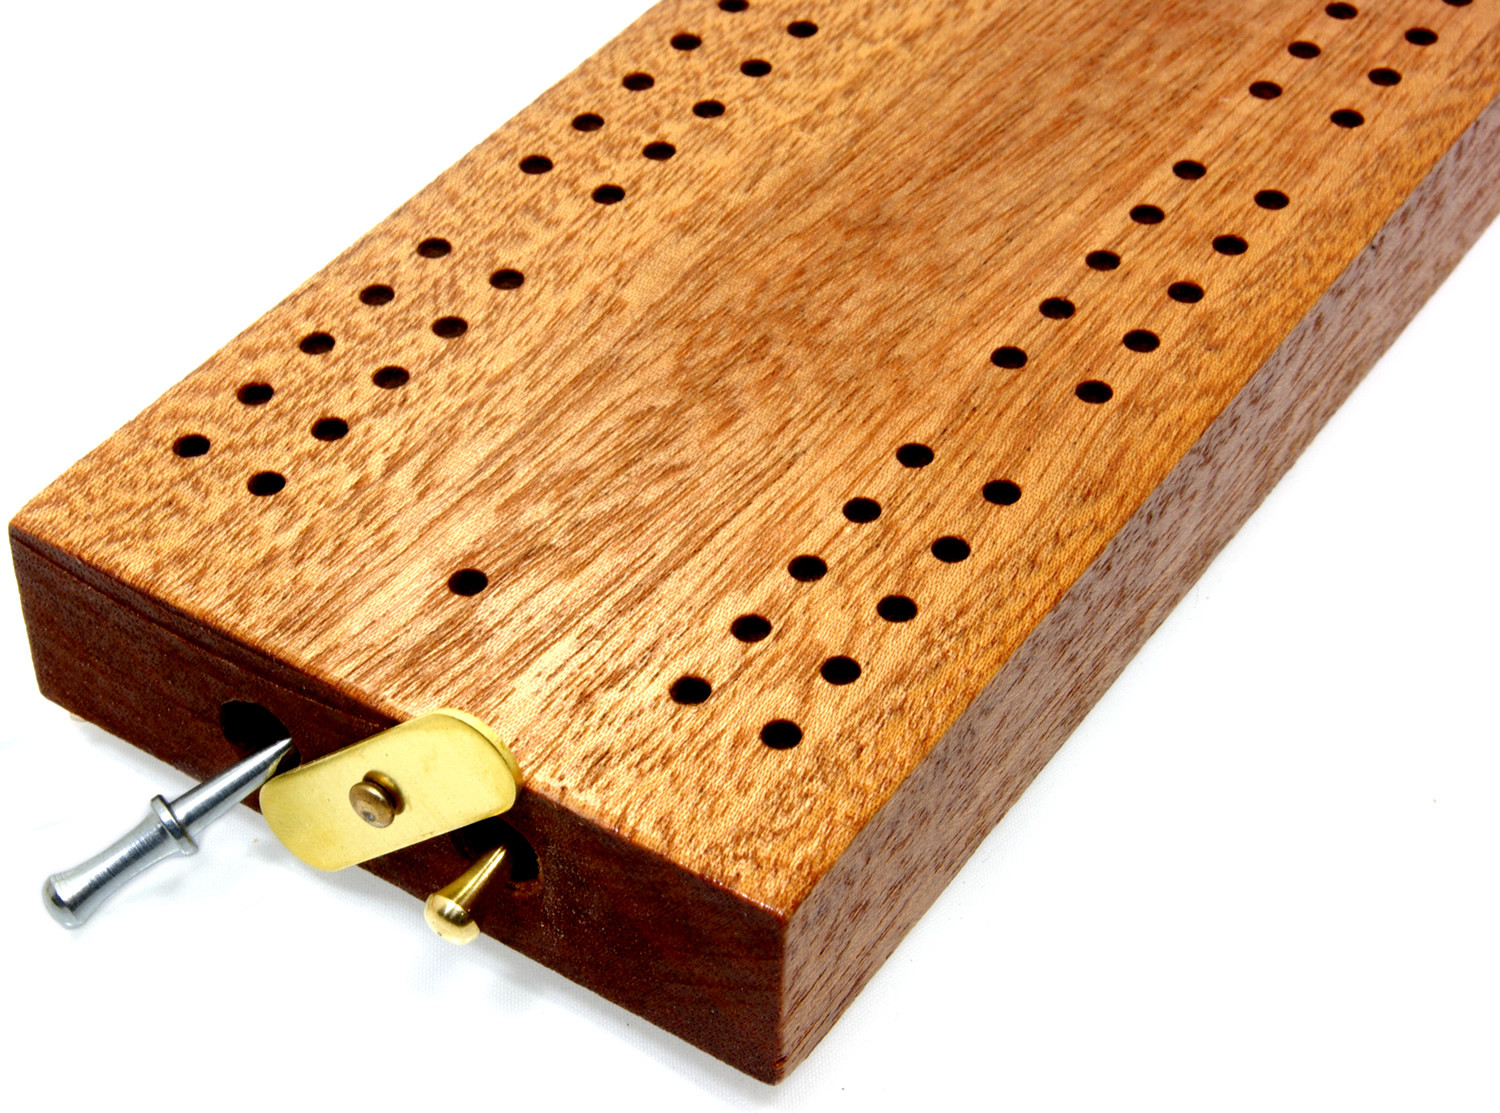 hardwood-cribbage-board-british-made-30cm-uk-cribbage-board